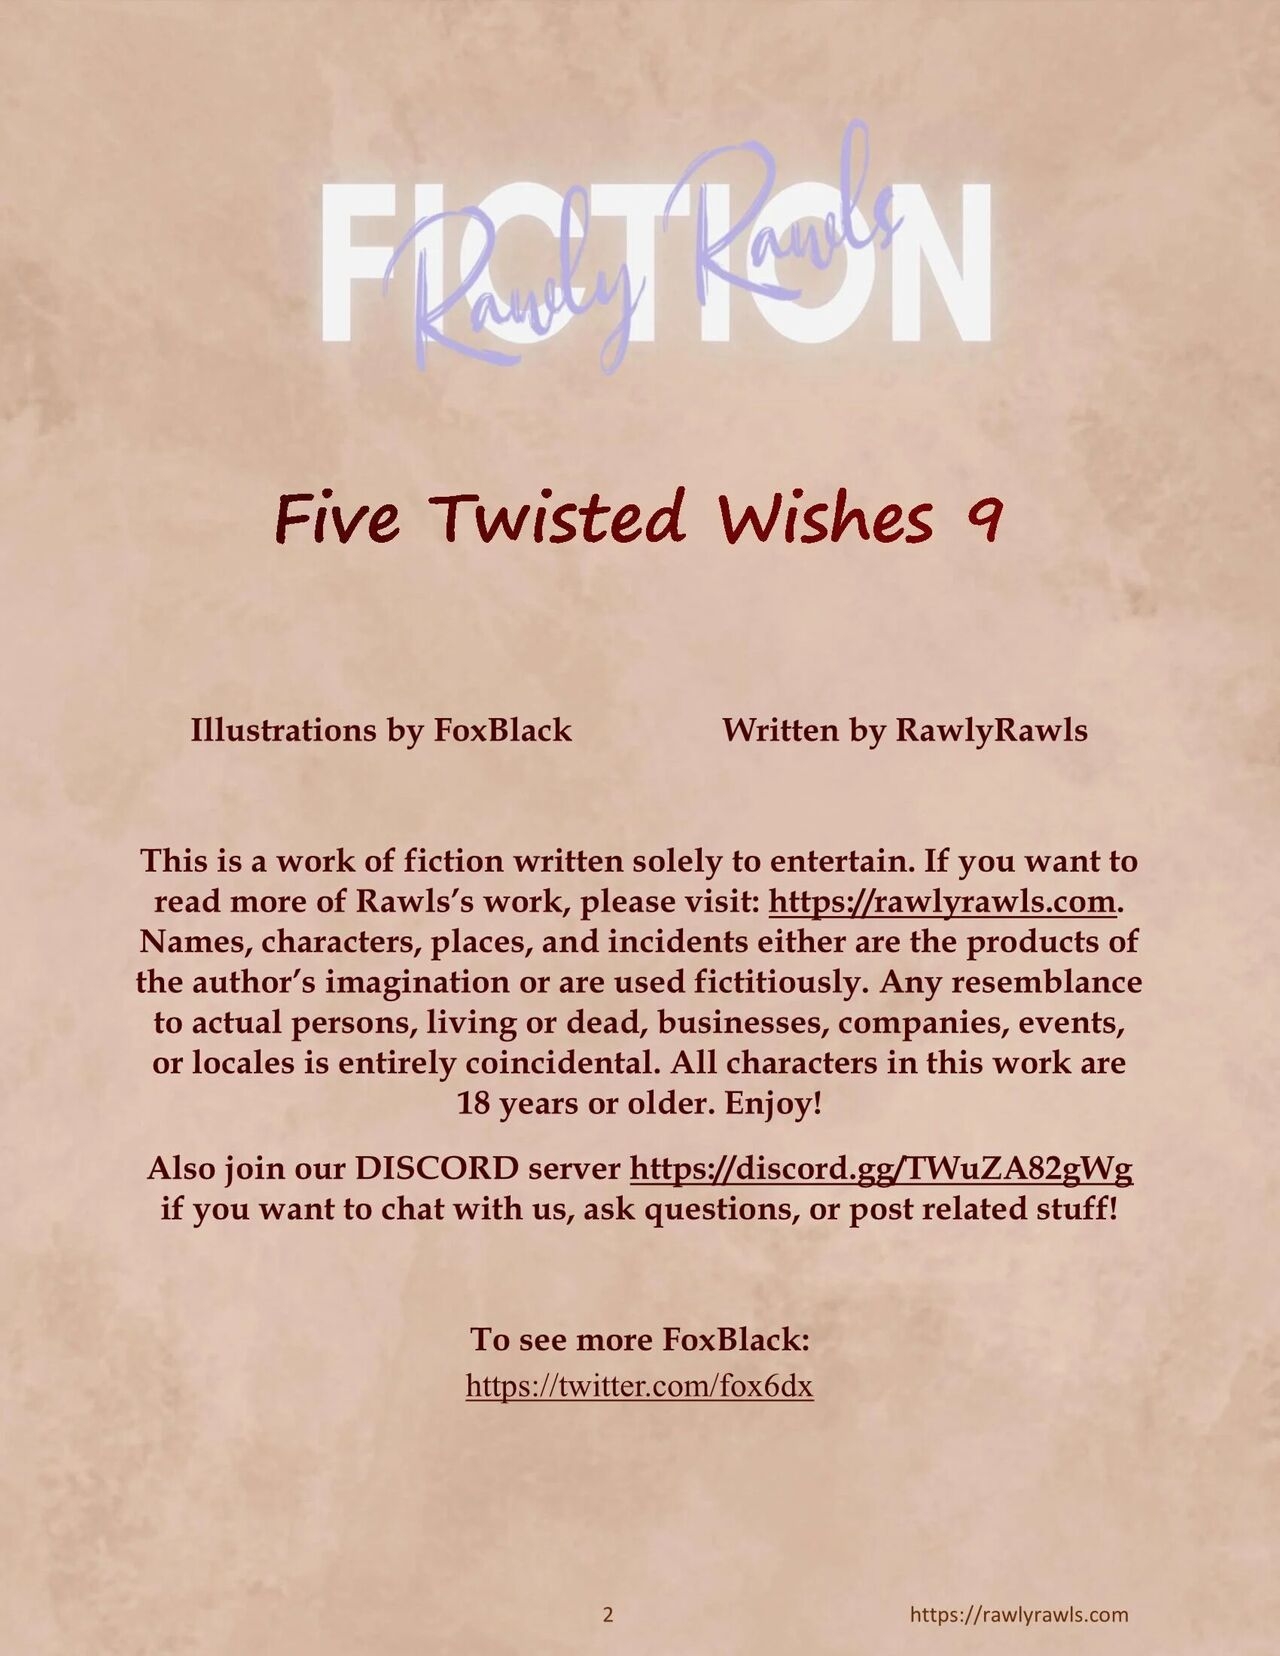 Five Twisted Wishes [FoxBlack , RawlyRawls] - 9 - english 1